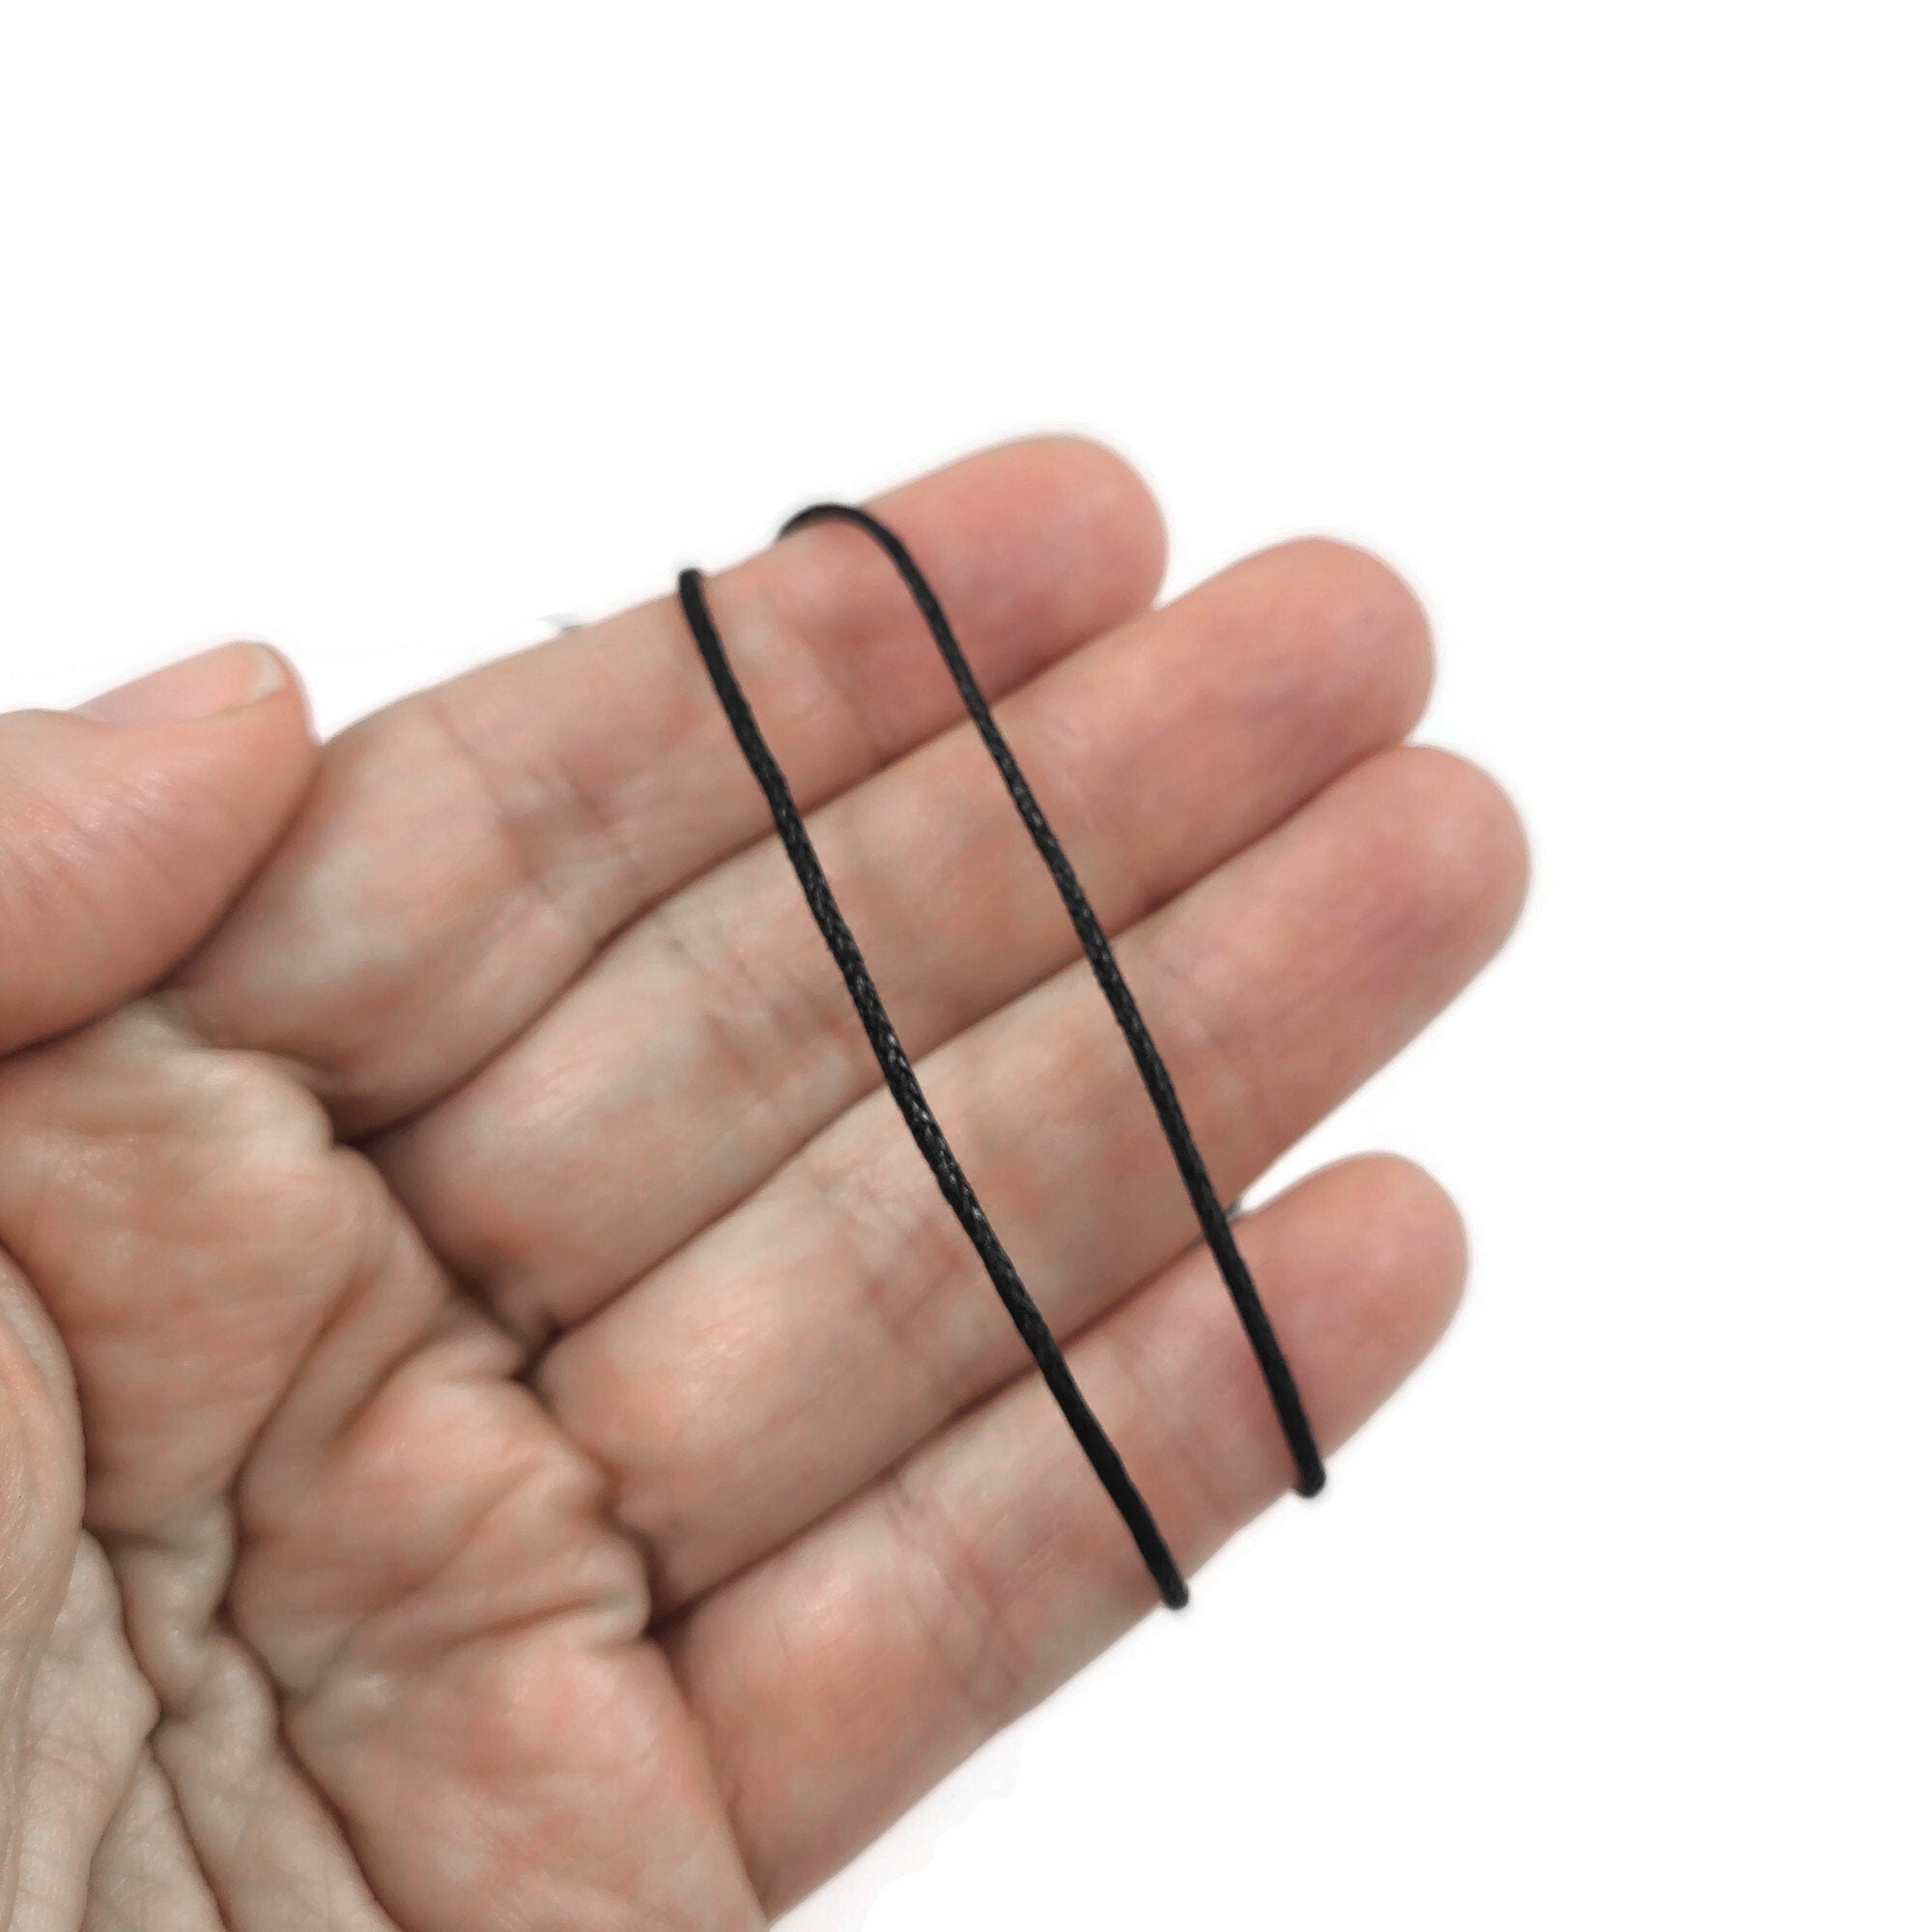 Black Handwoven Cord Adjustable Necklace 2mm Cord Necklace - Unisex Bo –  TibetanBeadStore